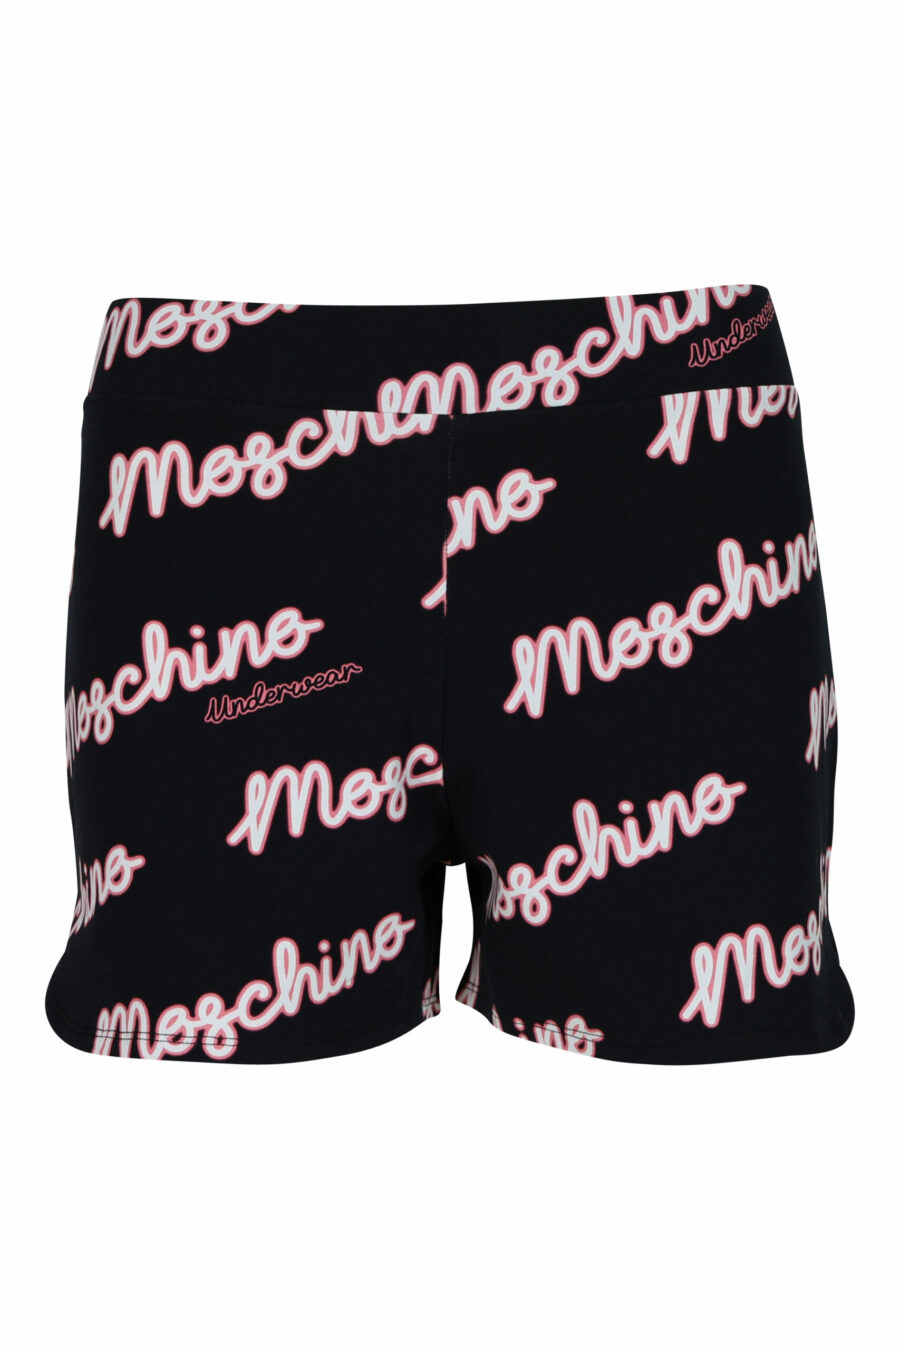 Shorts negros con "all over logo moschino" fucsia - 667113355603 scaled